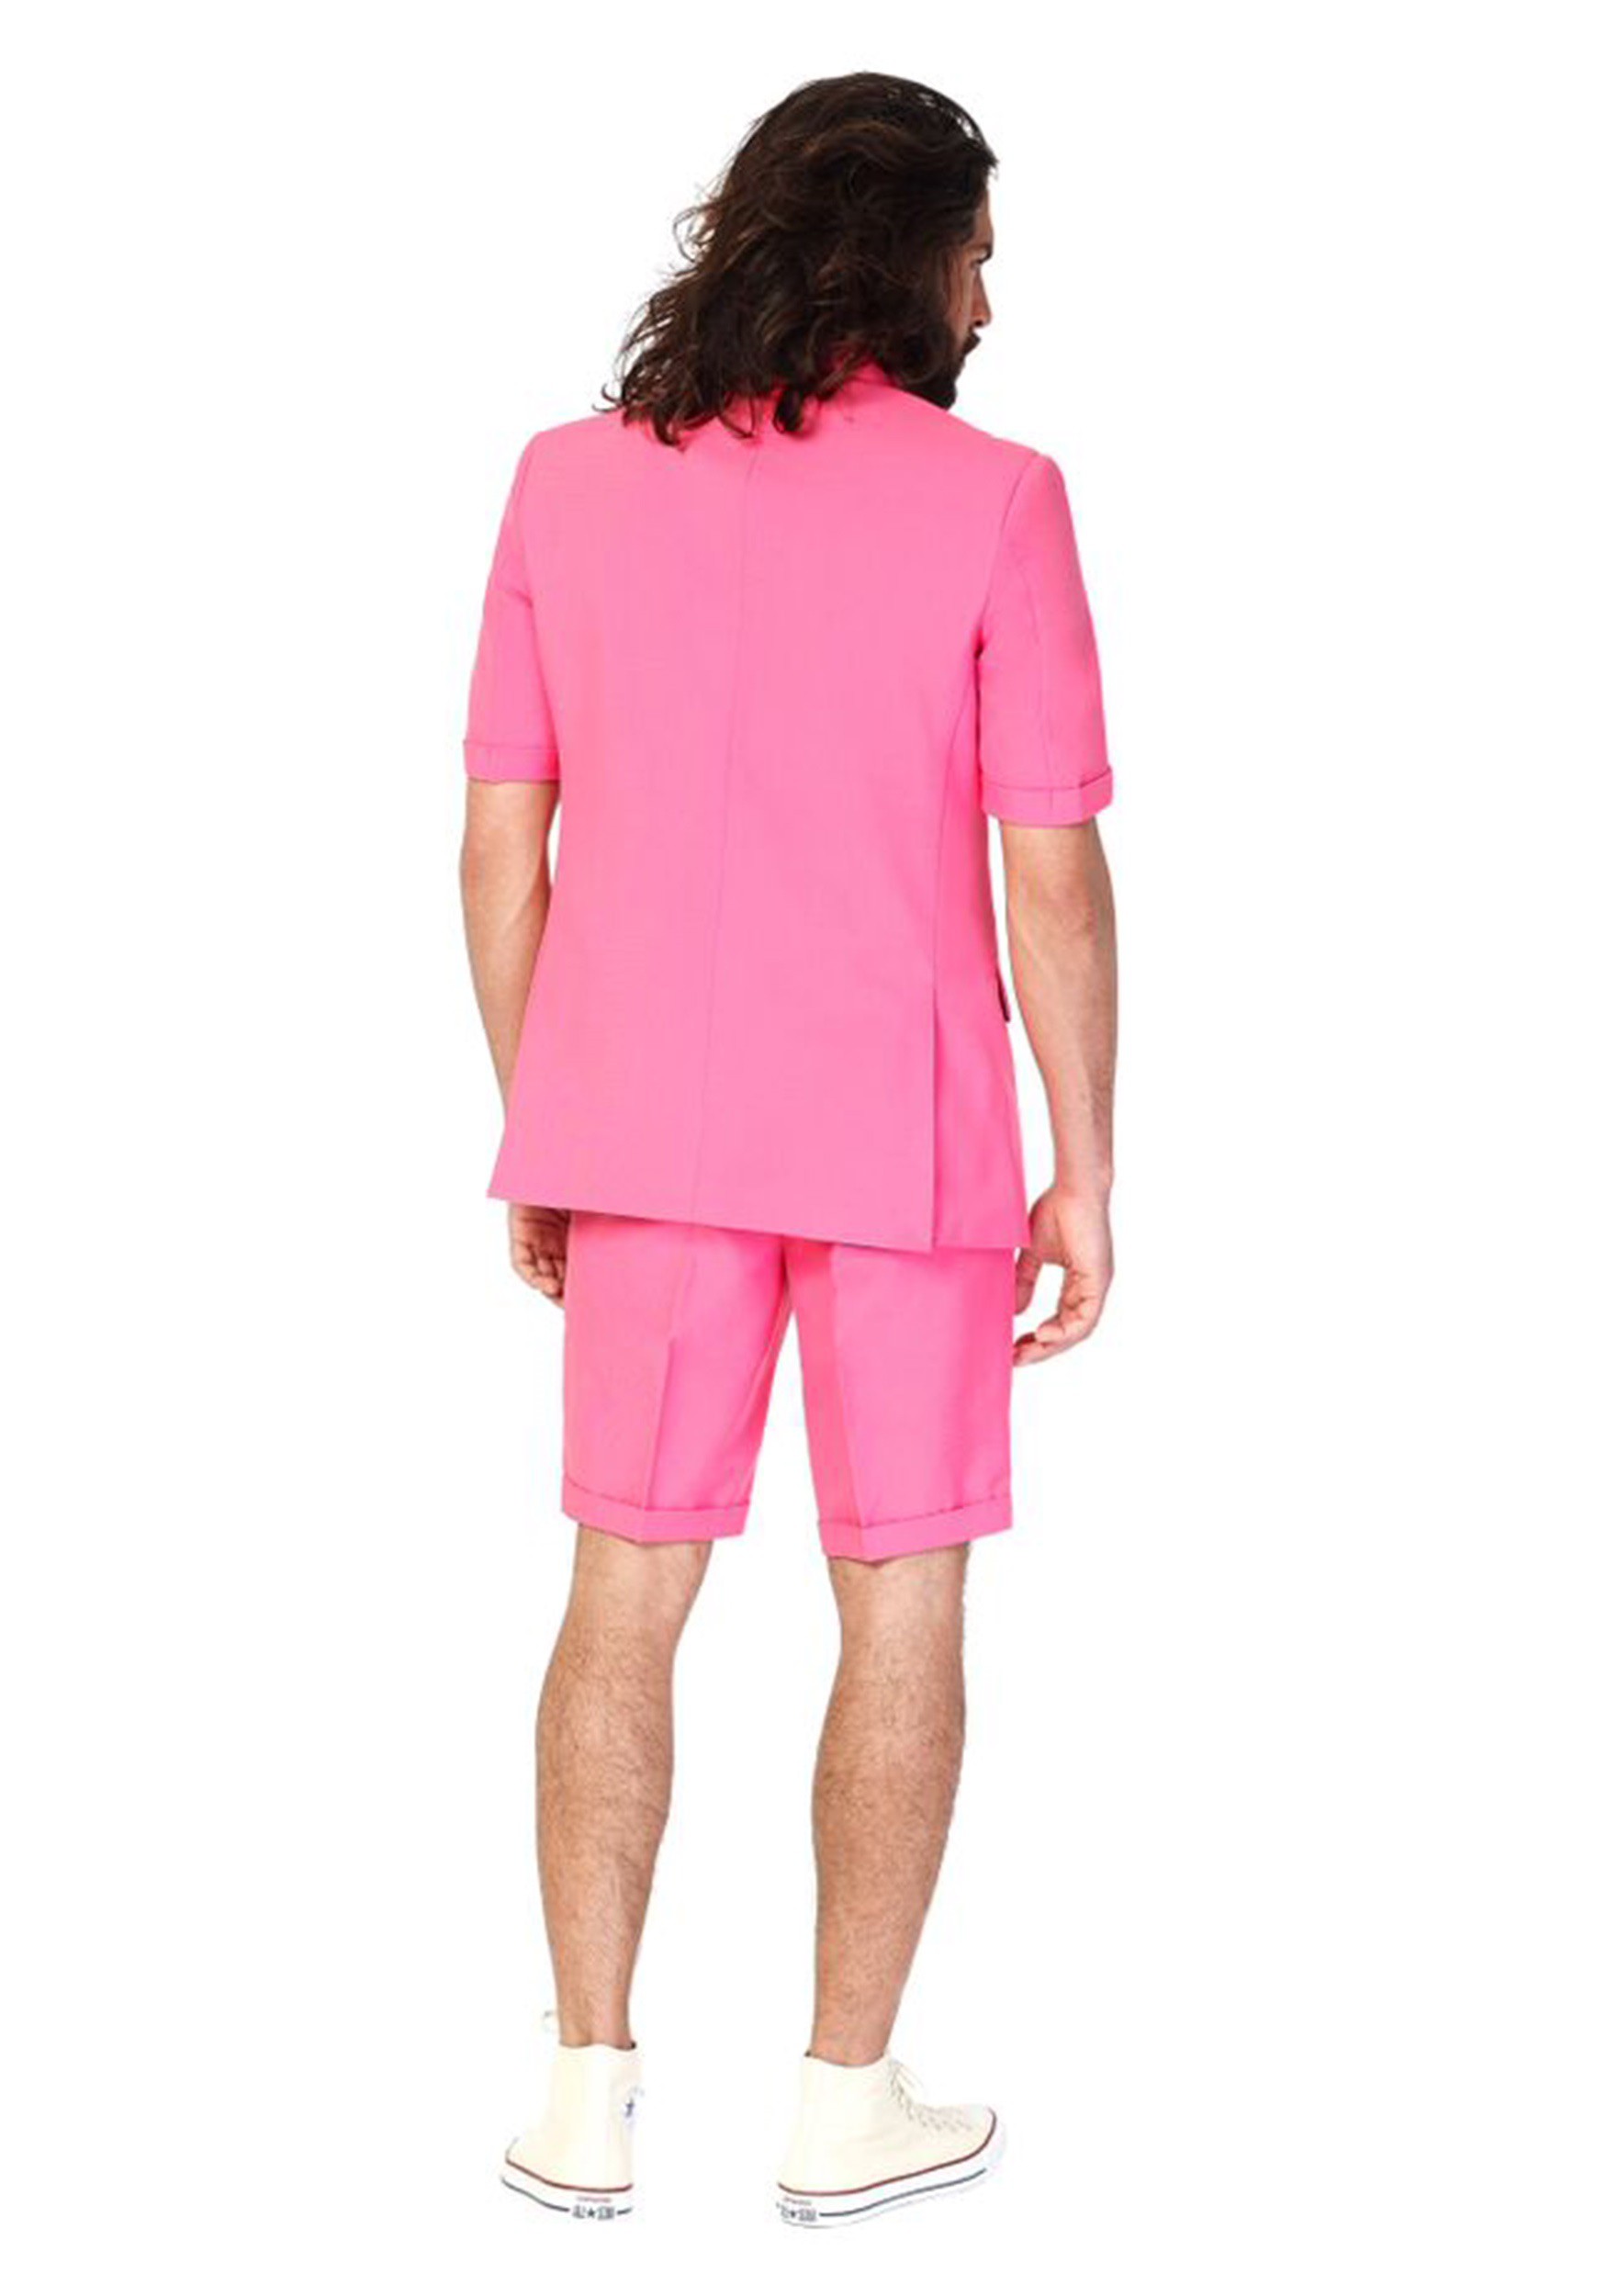 OppoSuits Mr. Pink Summer Suit Men's Fancy Dress Costume